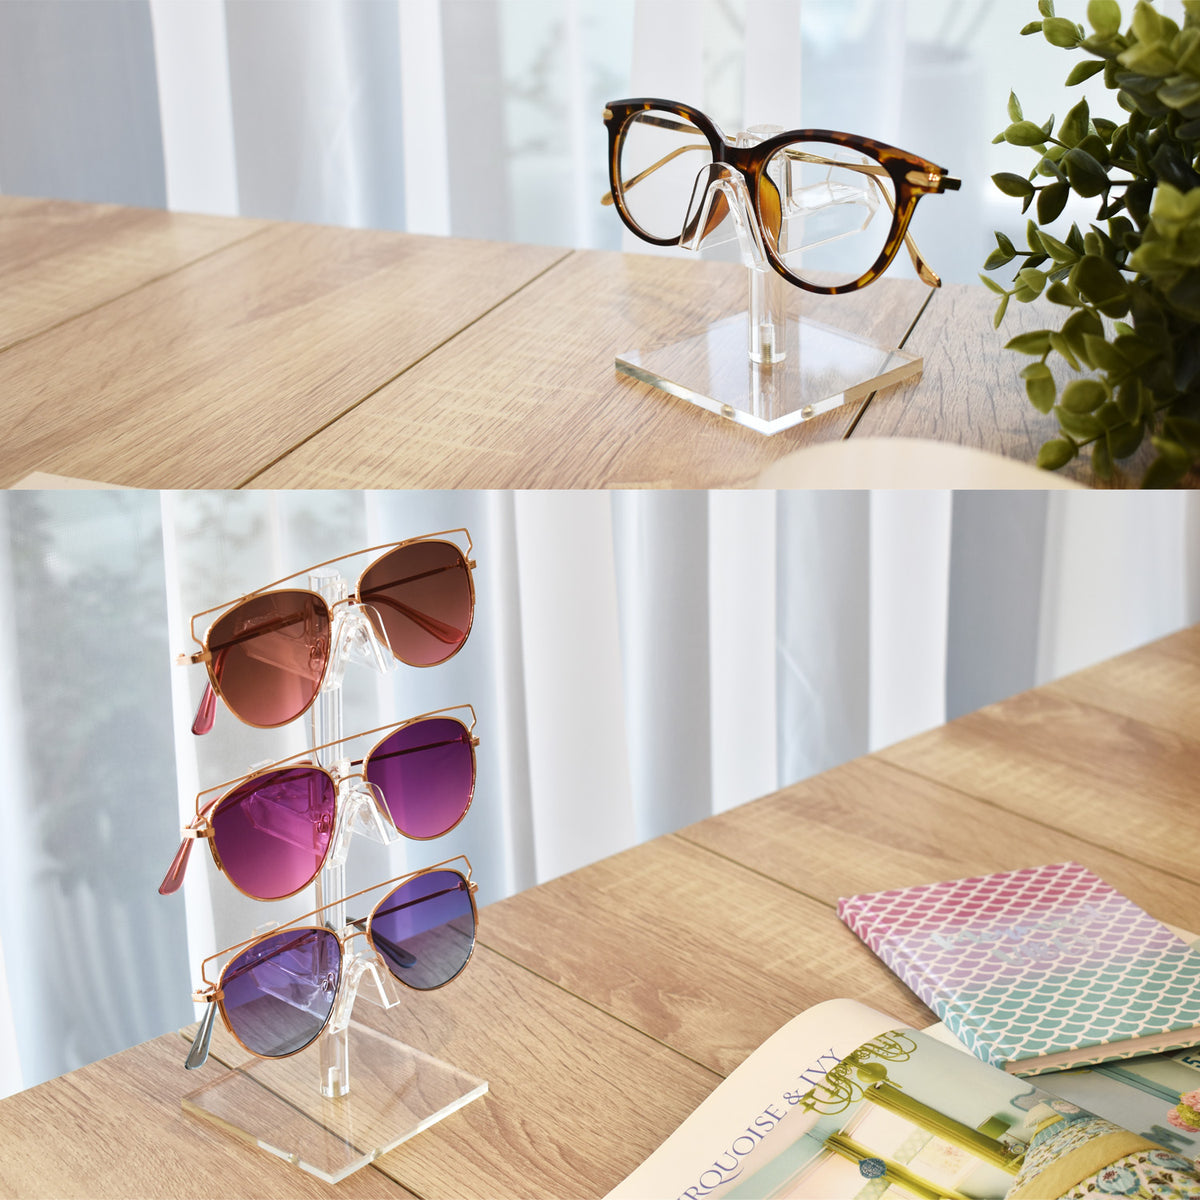 Acrylic Eyeglasses Frame Riser, 5pcs/set